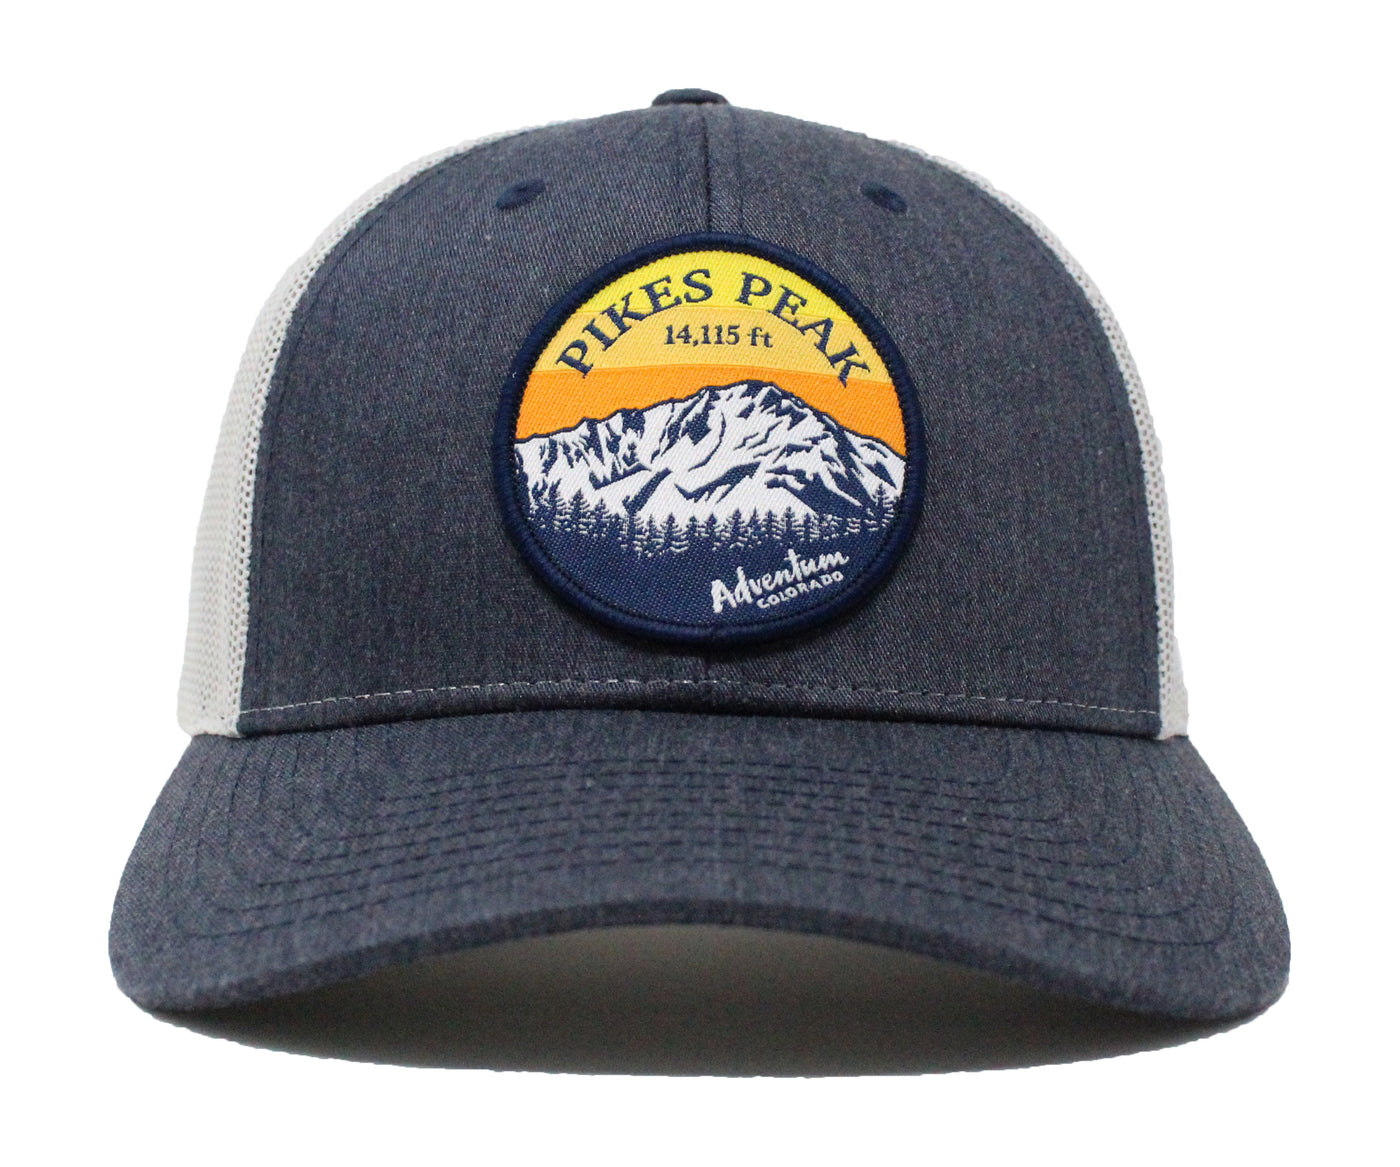 Pikes Peak Sunrise Trucker Hat | 14,115'